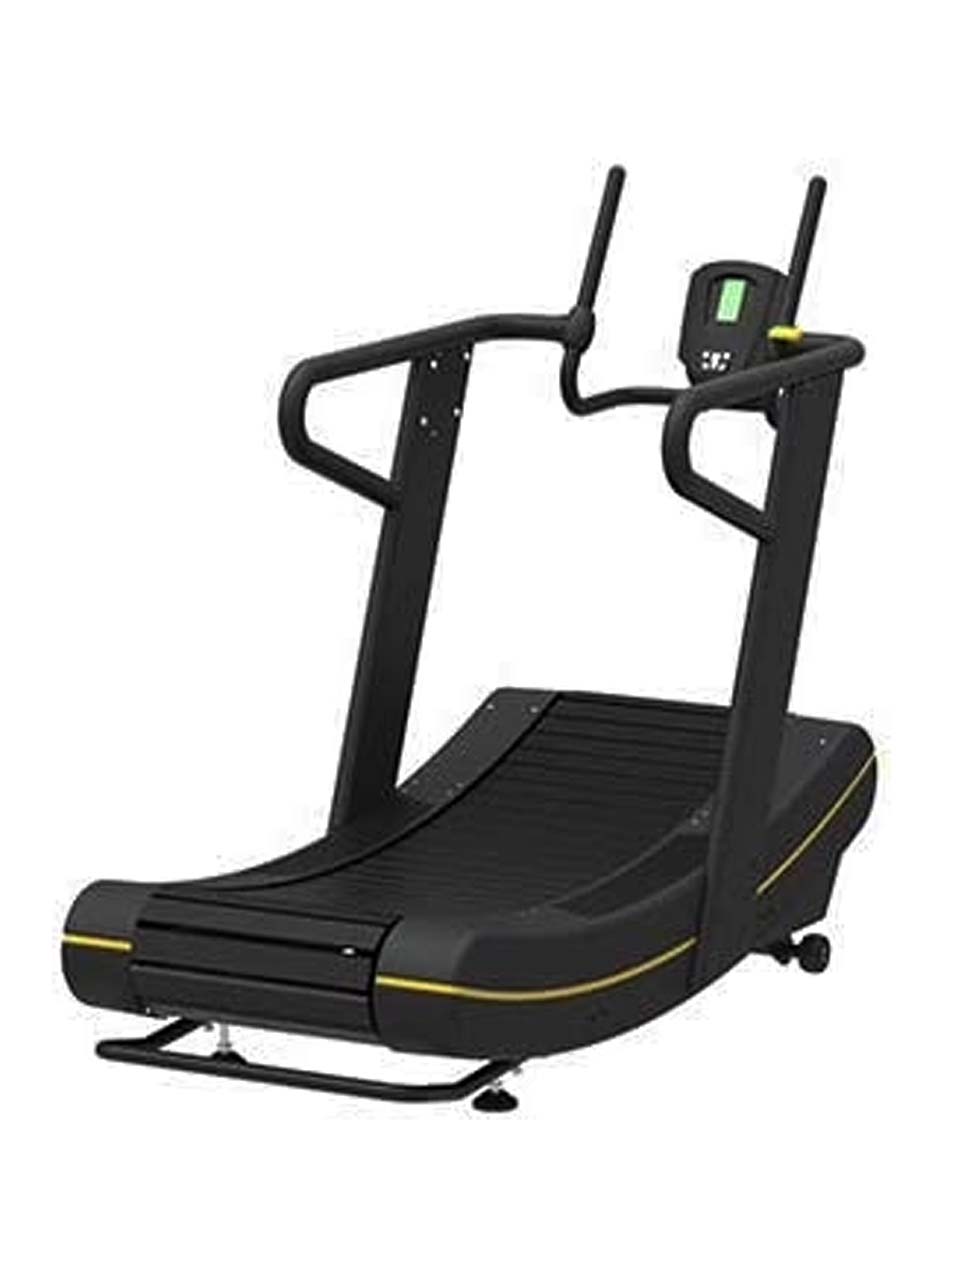 Afton JG9700 Commercial Curve Treadmill